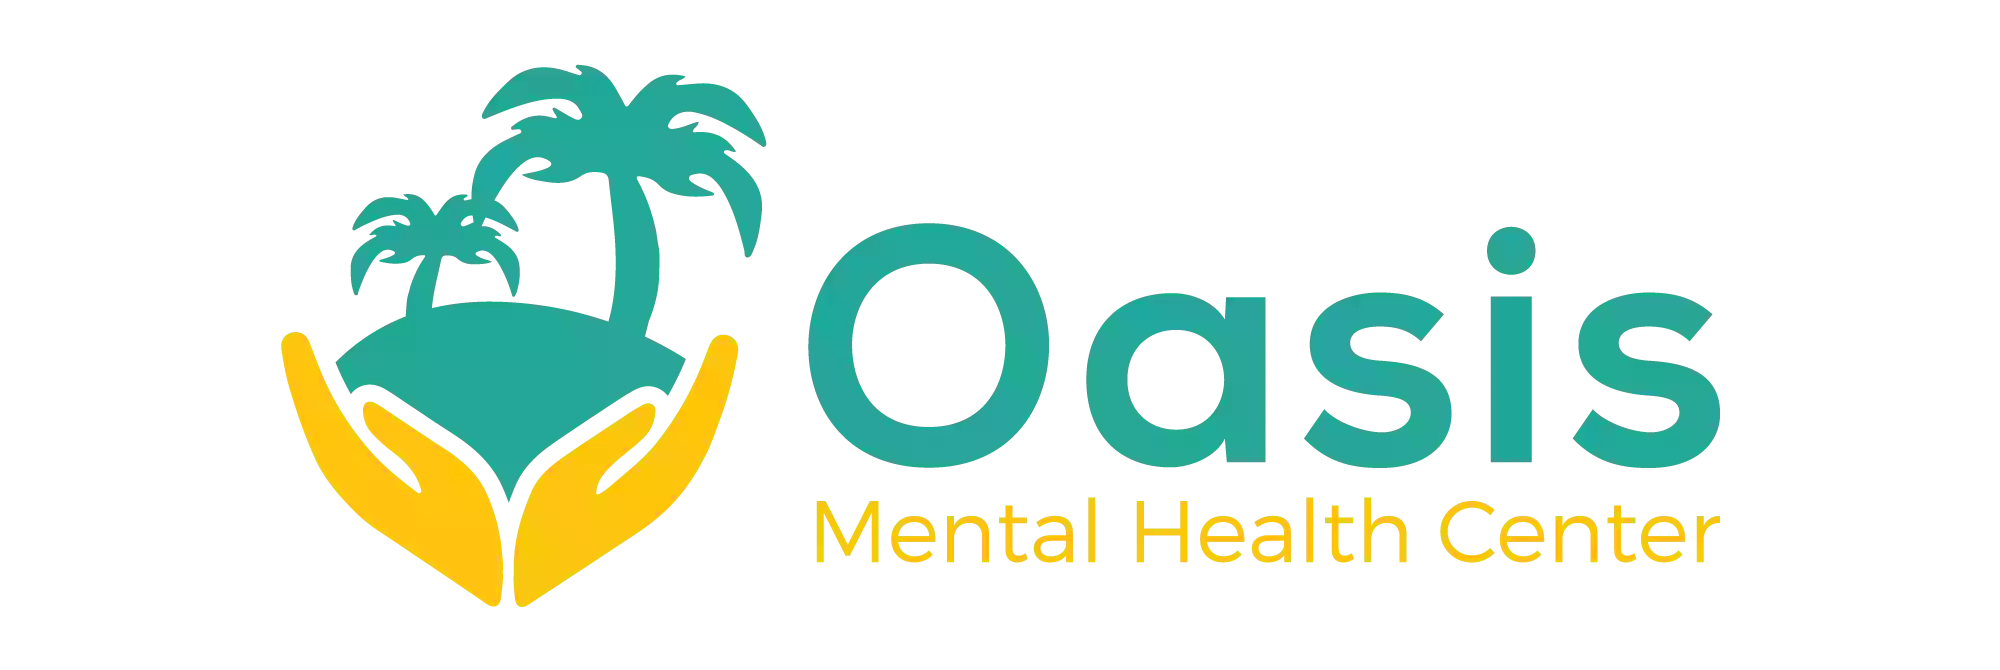 Oasis Mental Health Center LLC